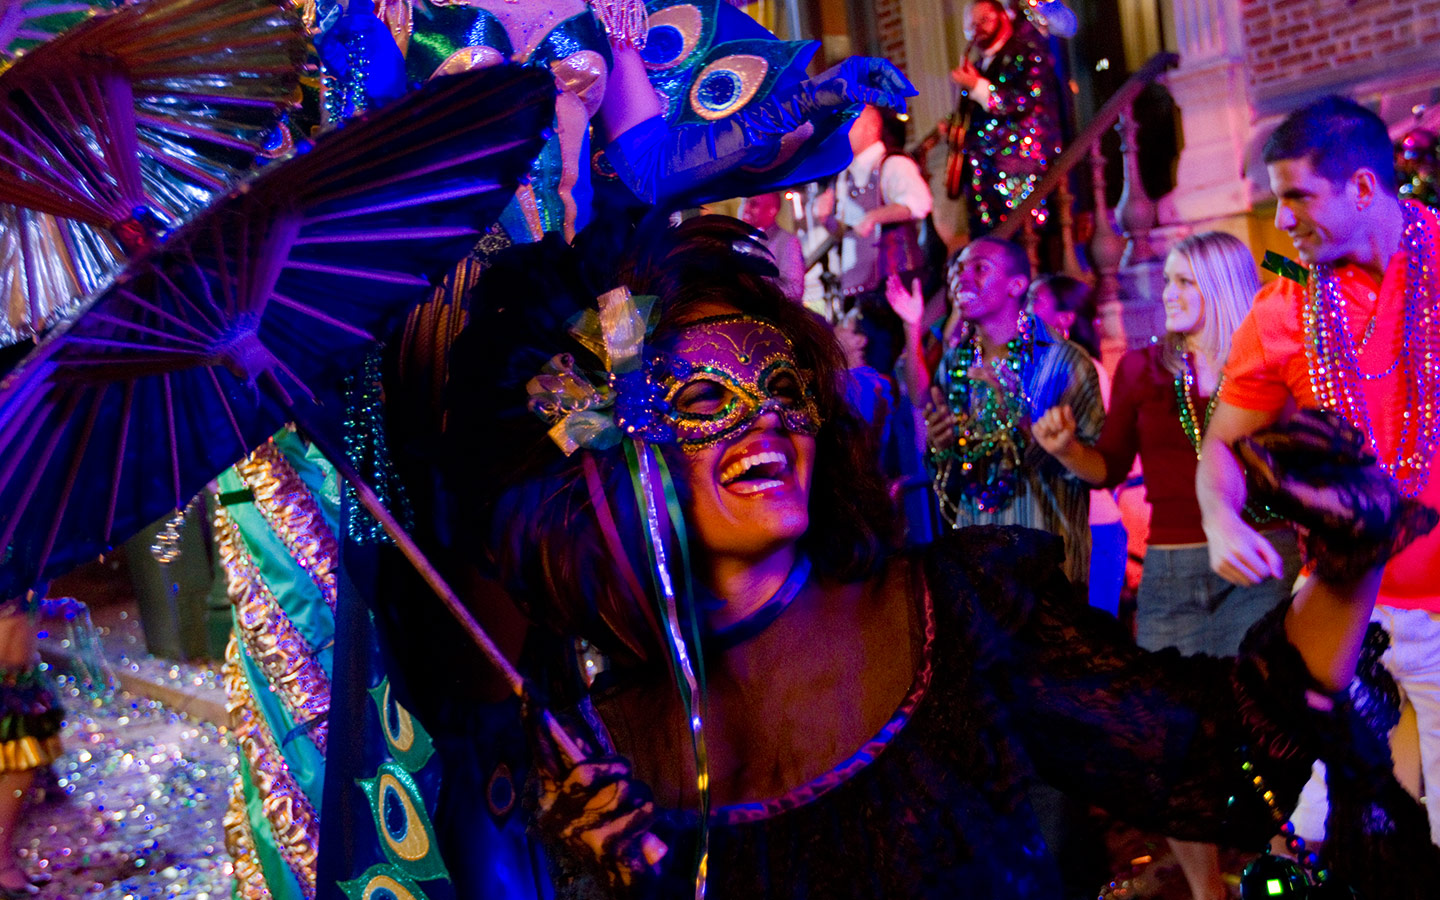 Enjoy a colorful parade at Universal Orlando's Mardi Gras